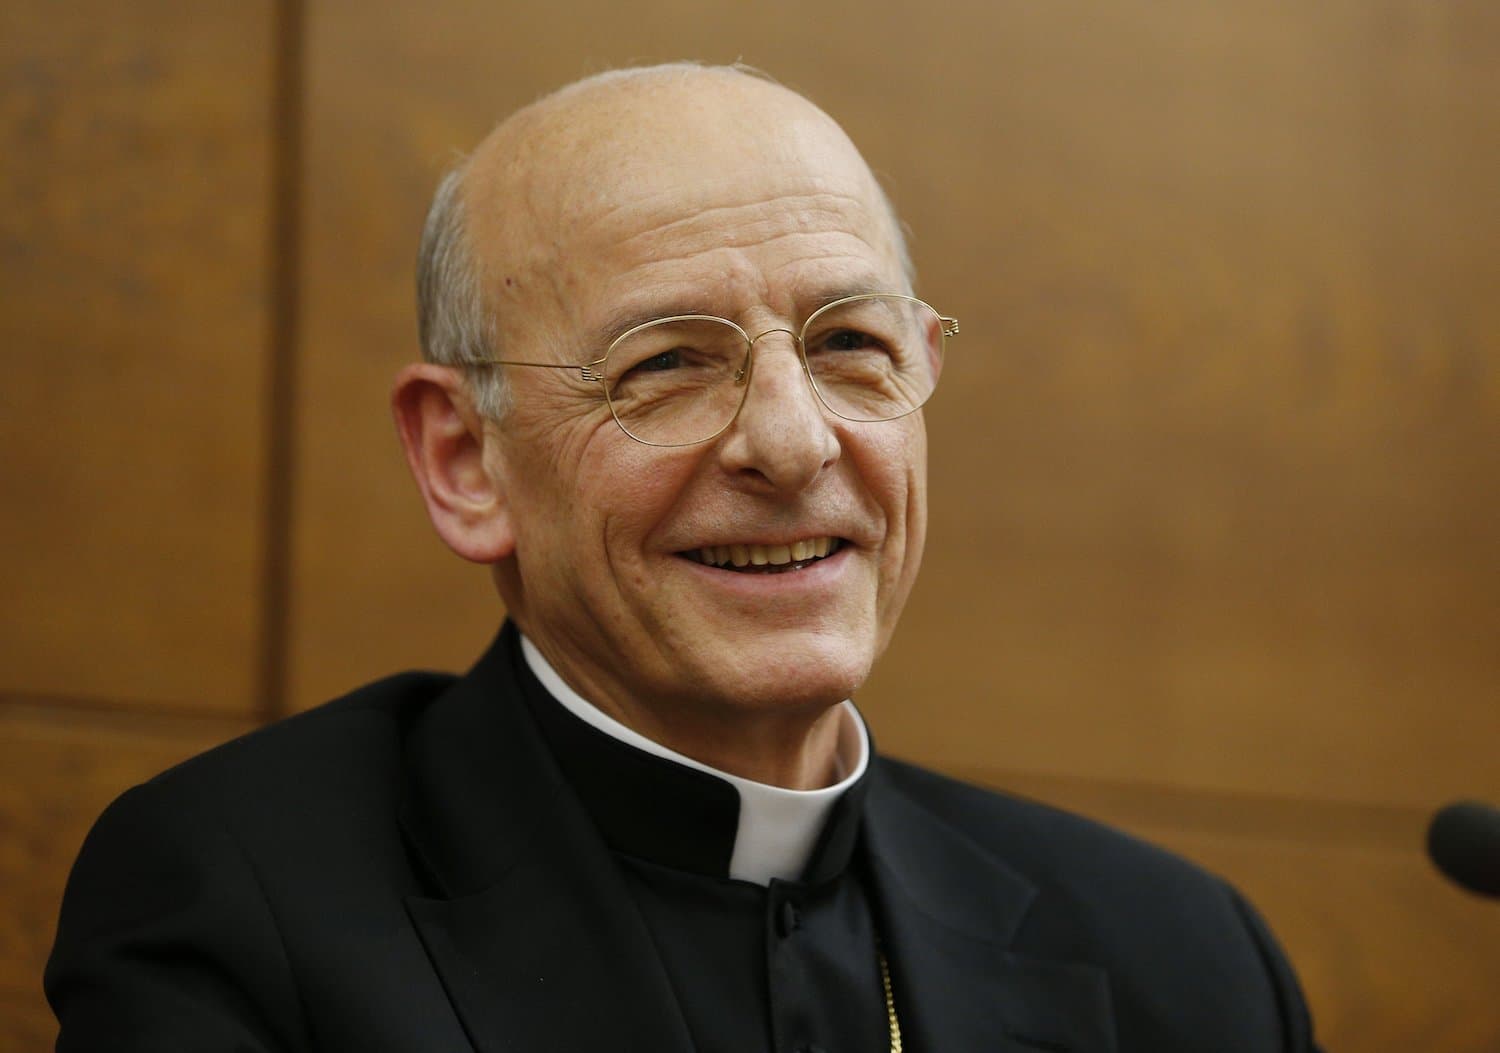 Opus Dei canon law changes